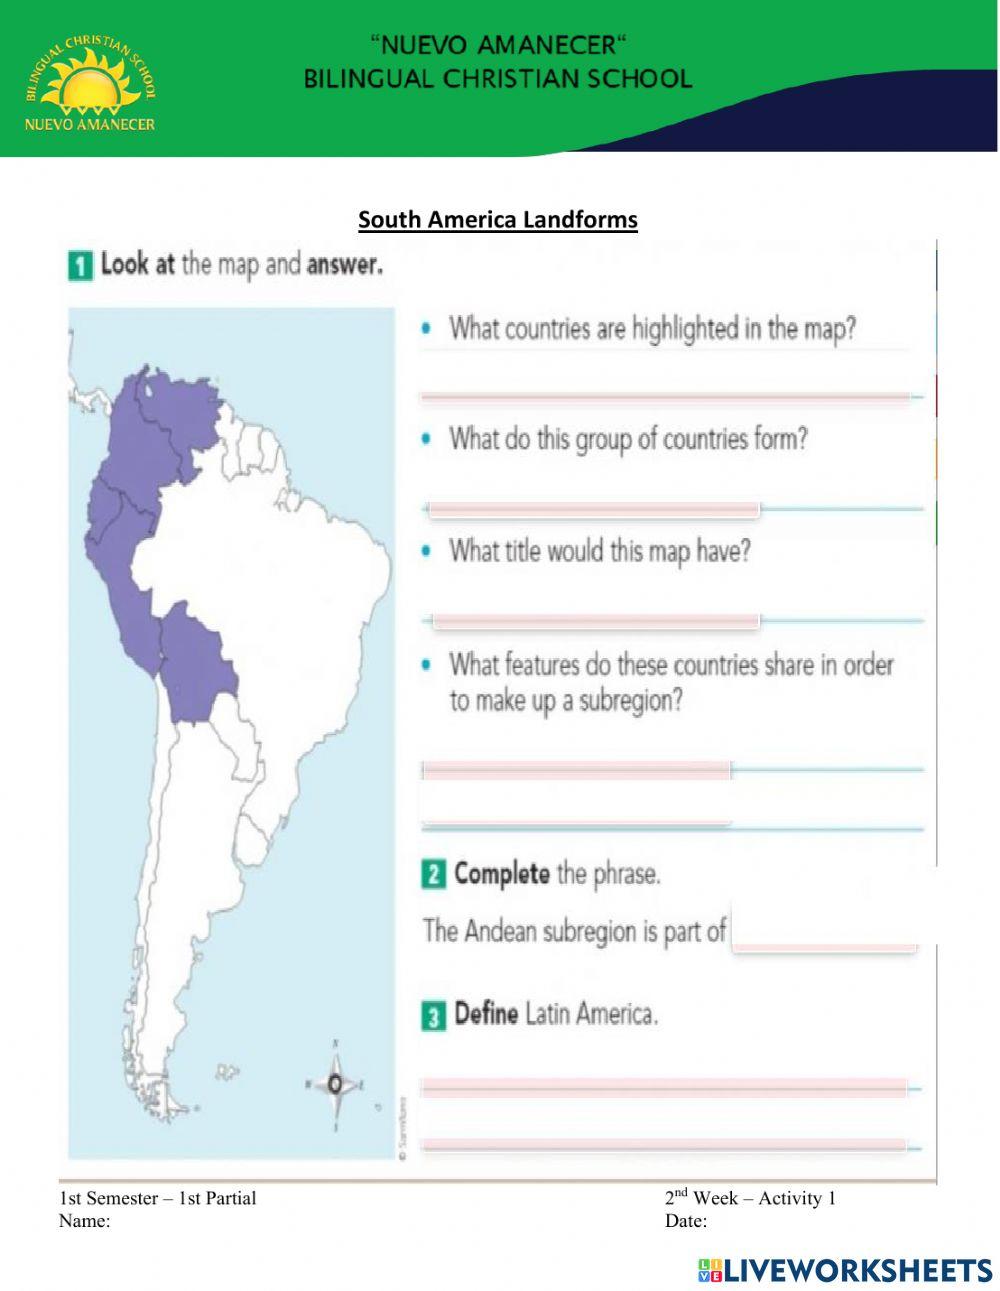 South American Landforms